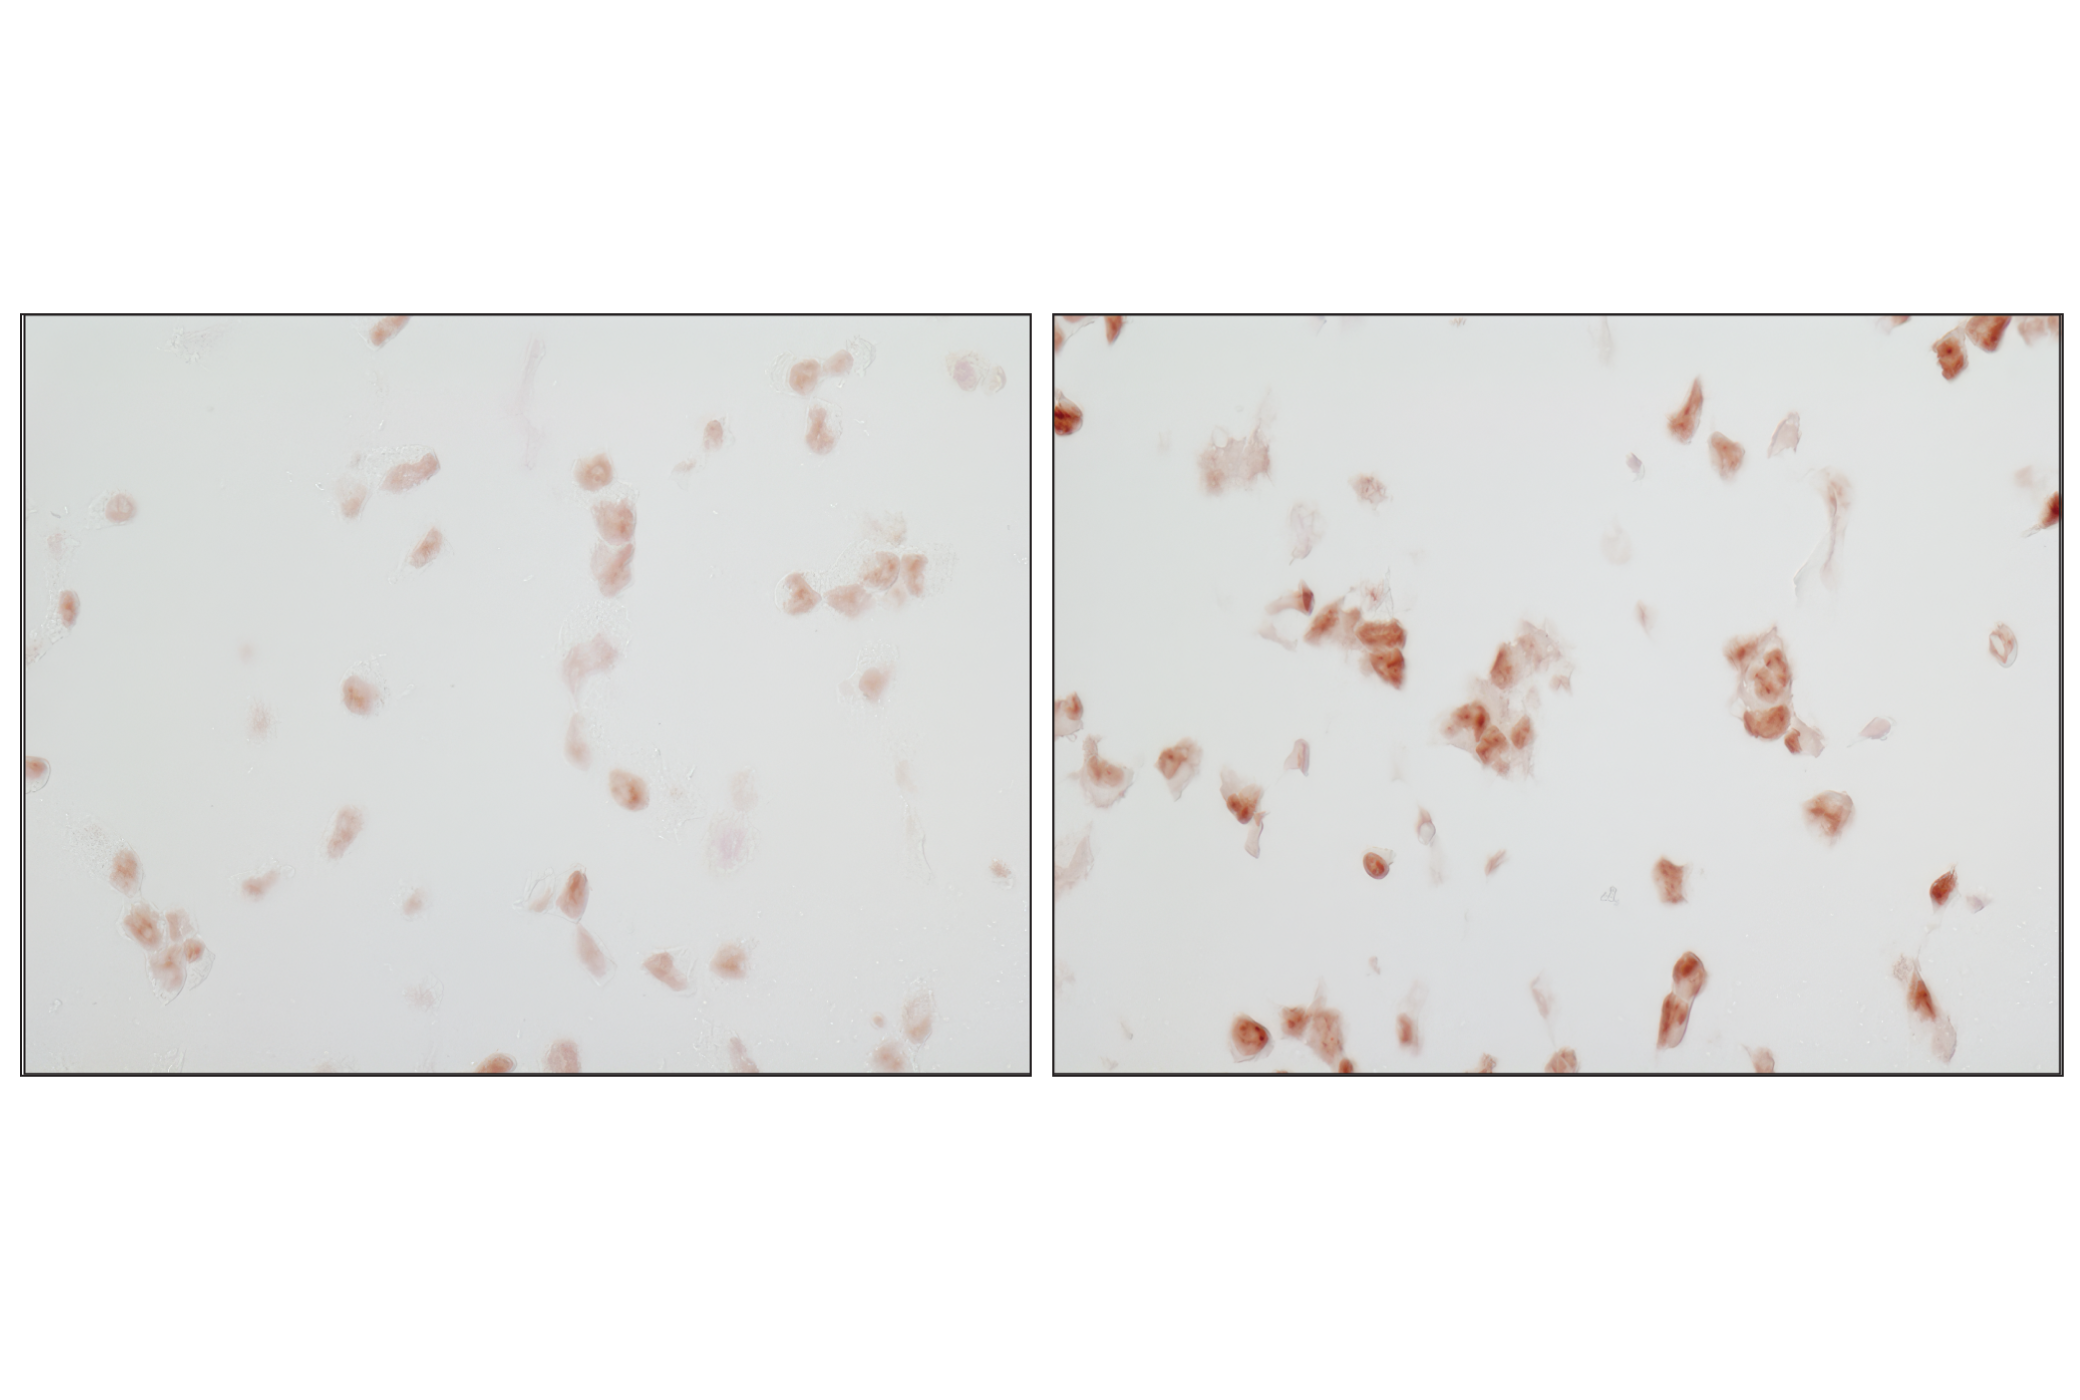  Image 13: p38 MAPK Isoform Activation Antibody Sampler Kit